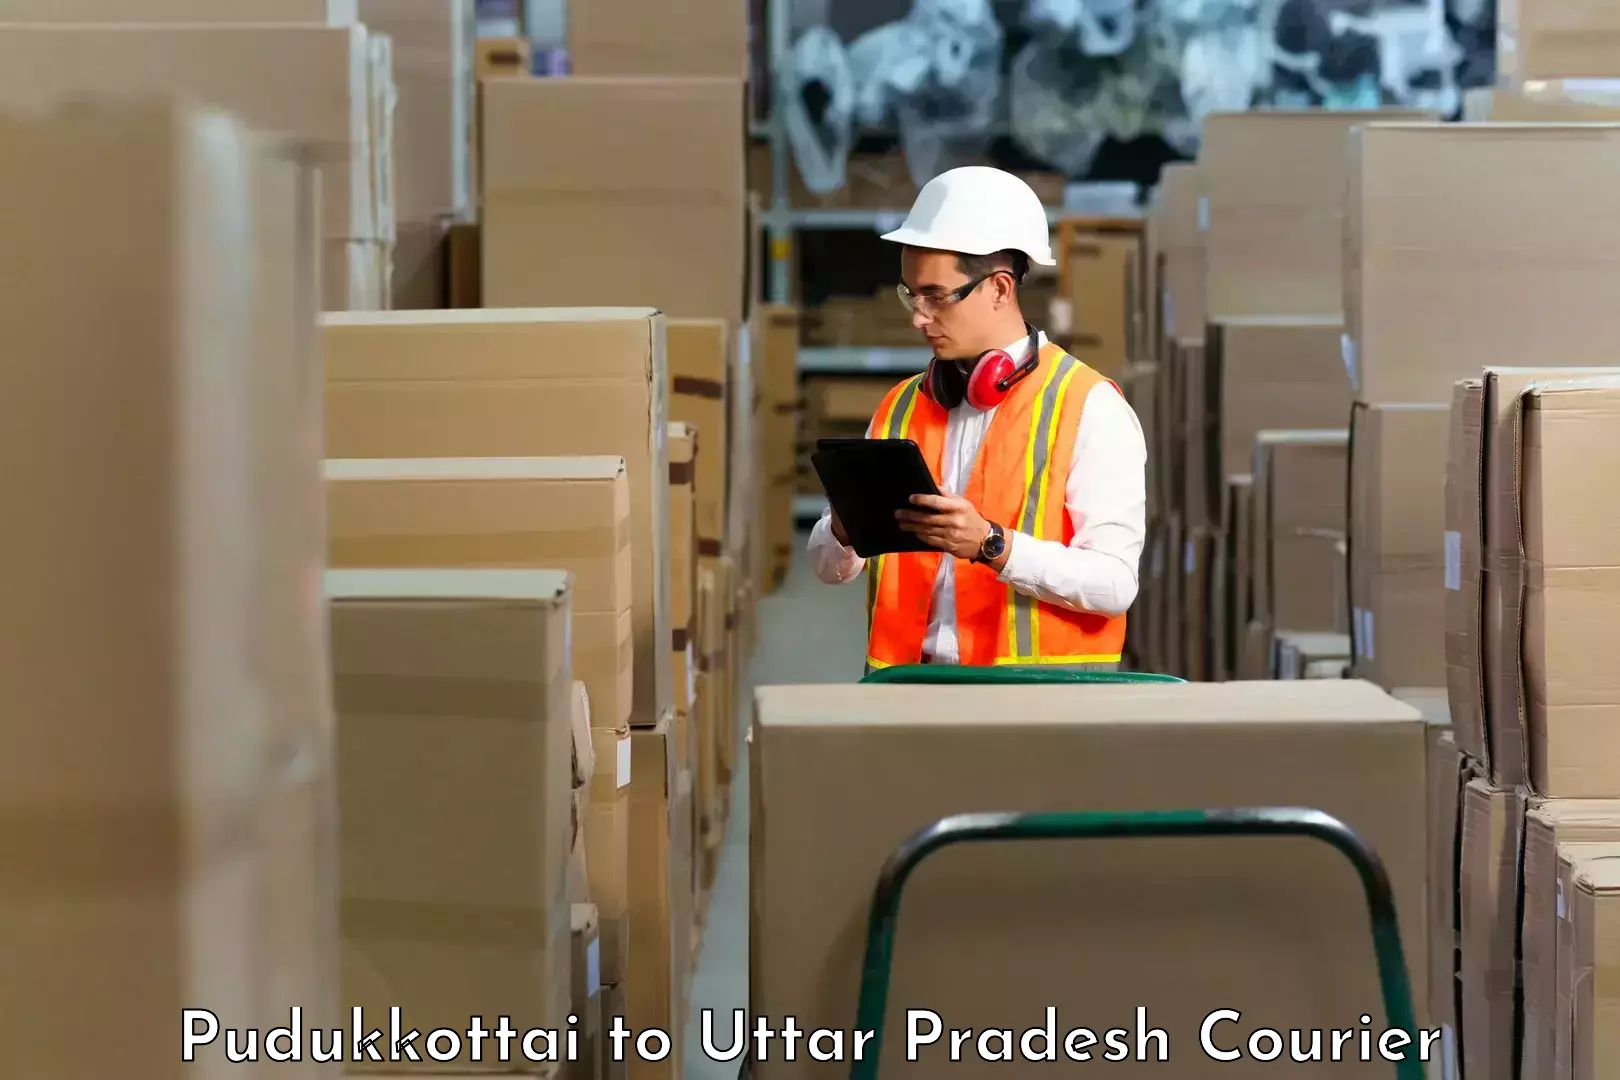 Enhanced tracking features Pudukkottai to Sadat